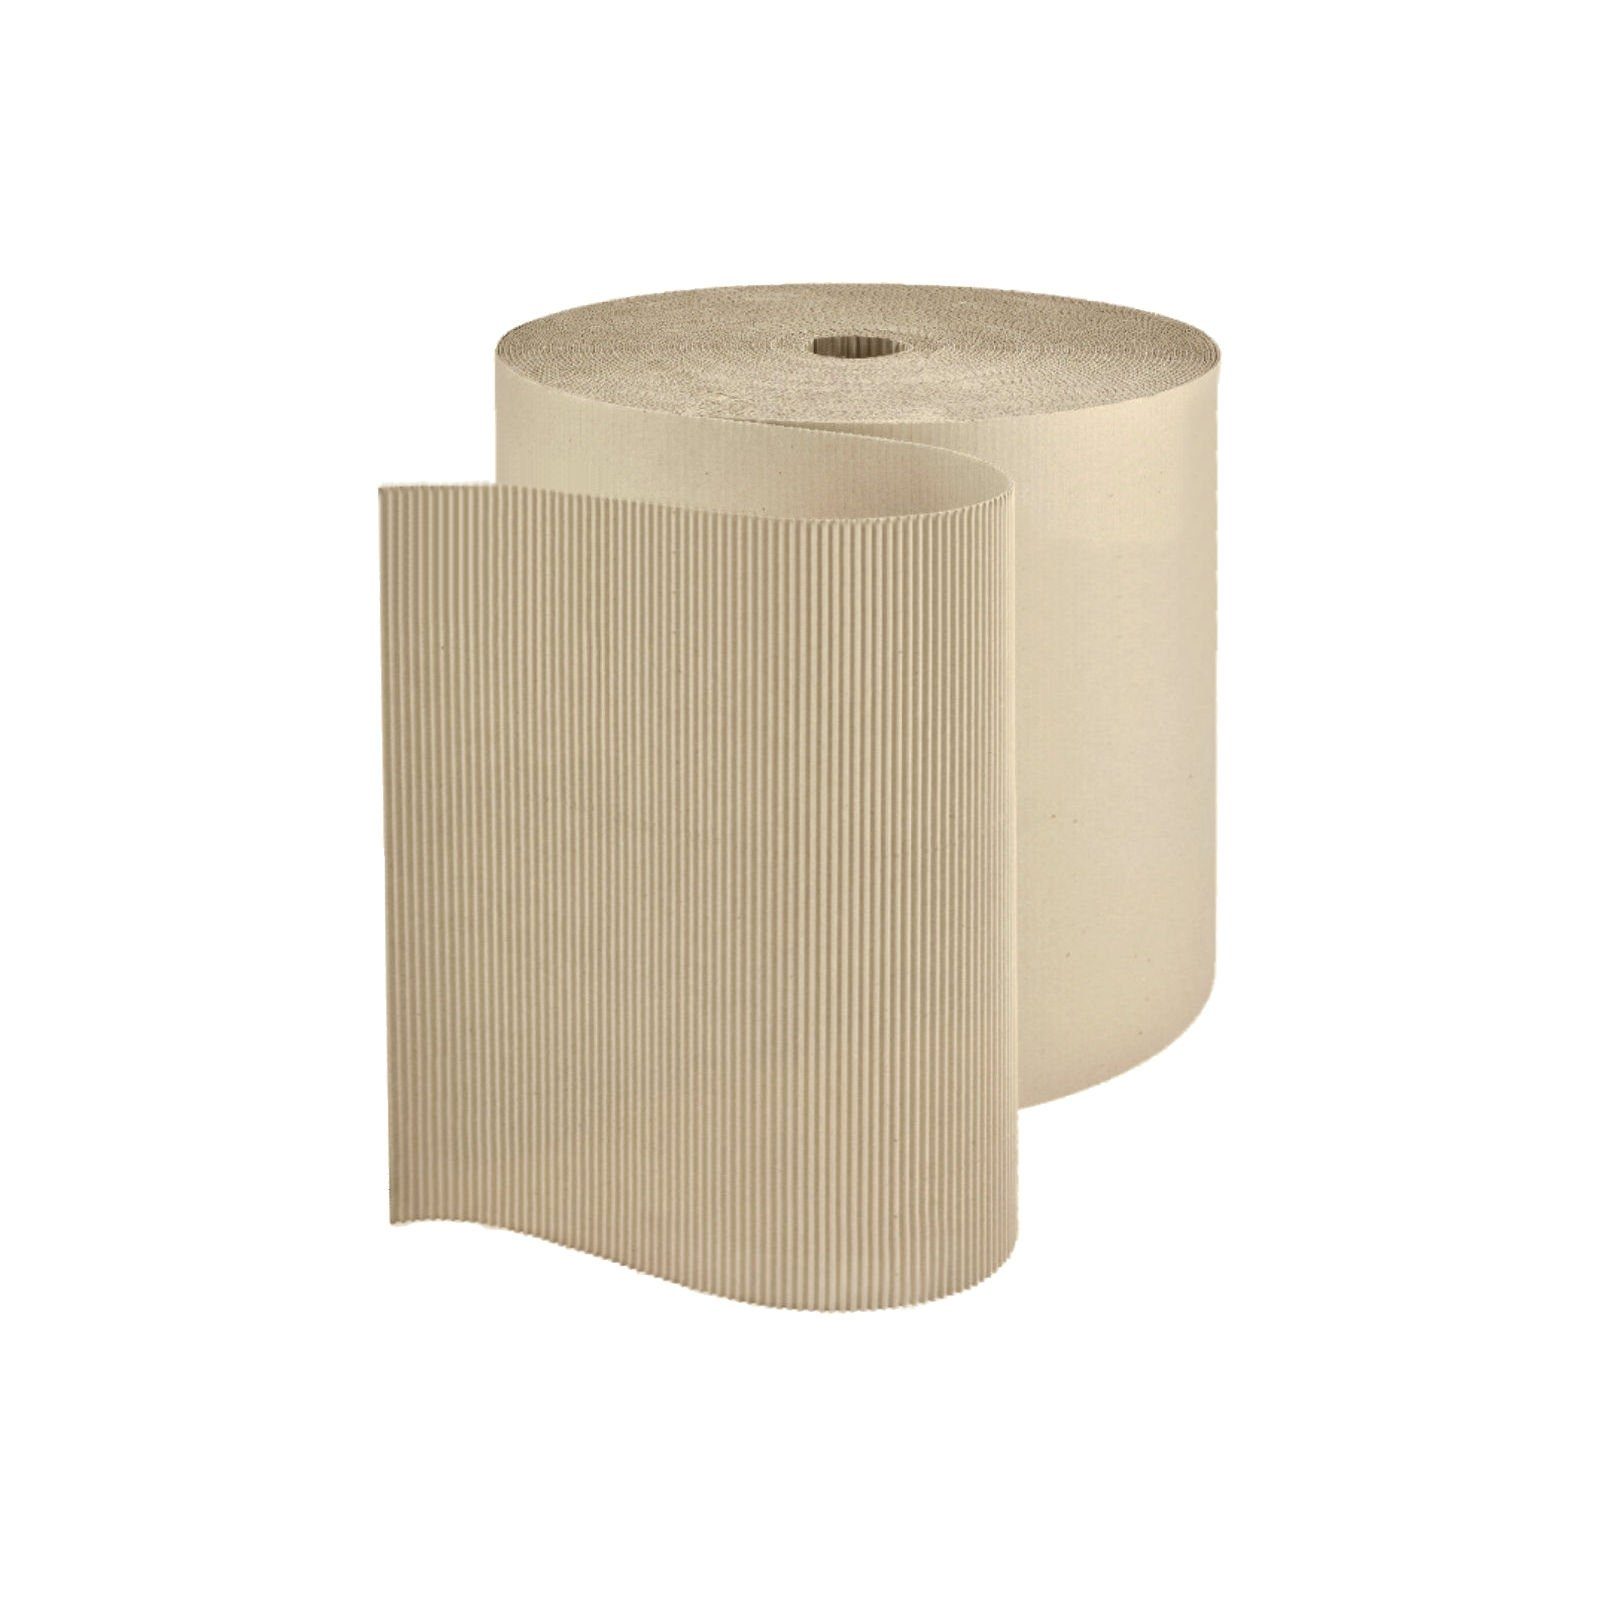 KK Verpackungen Seidenpapier, Rollen-Wellenpappe Polstermaterial Wellpappe Breite 0,5m Grau